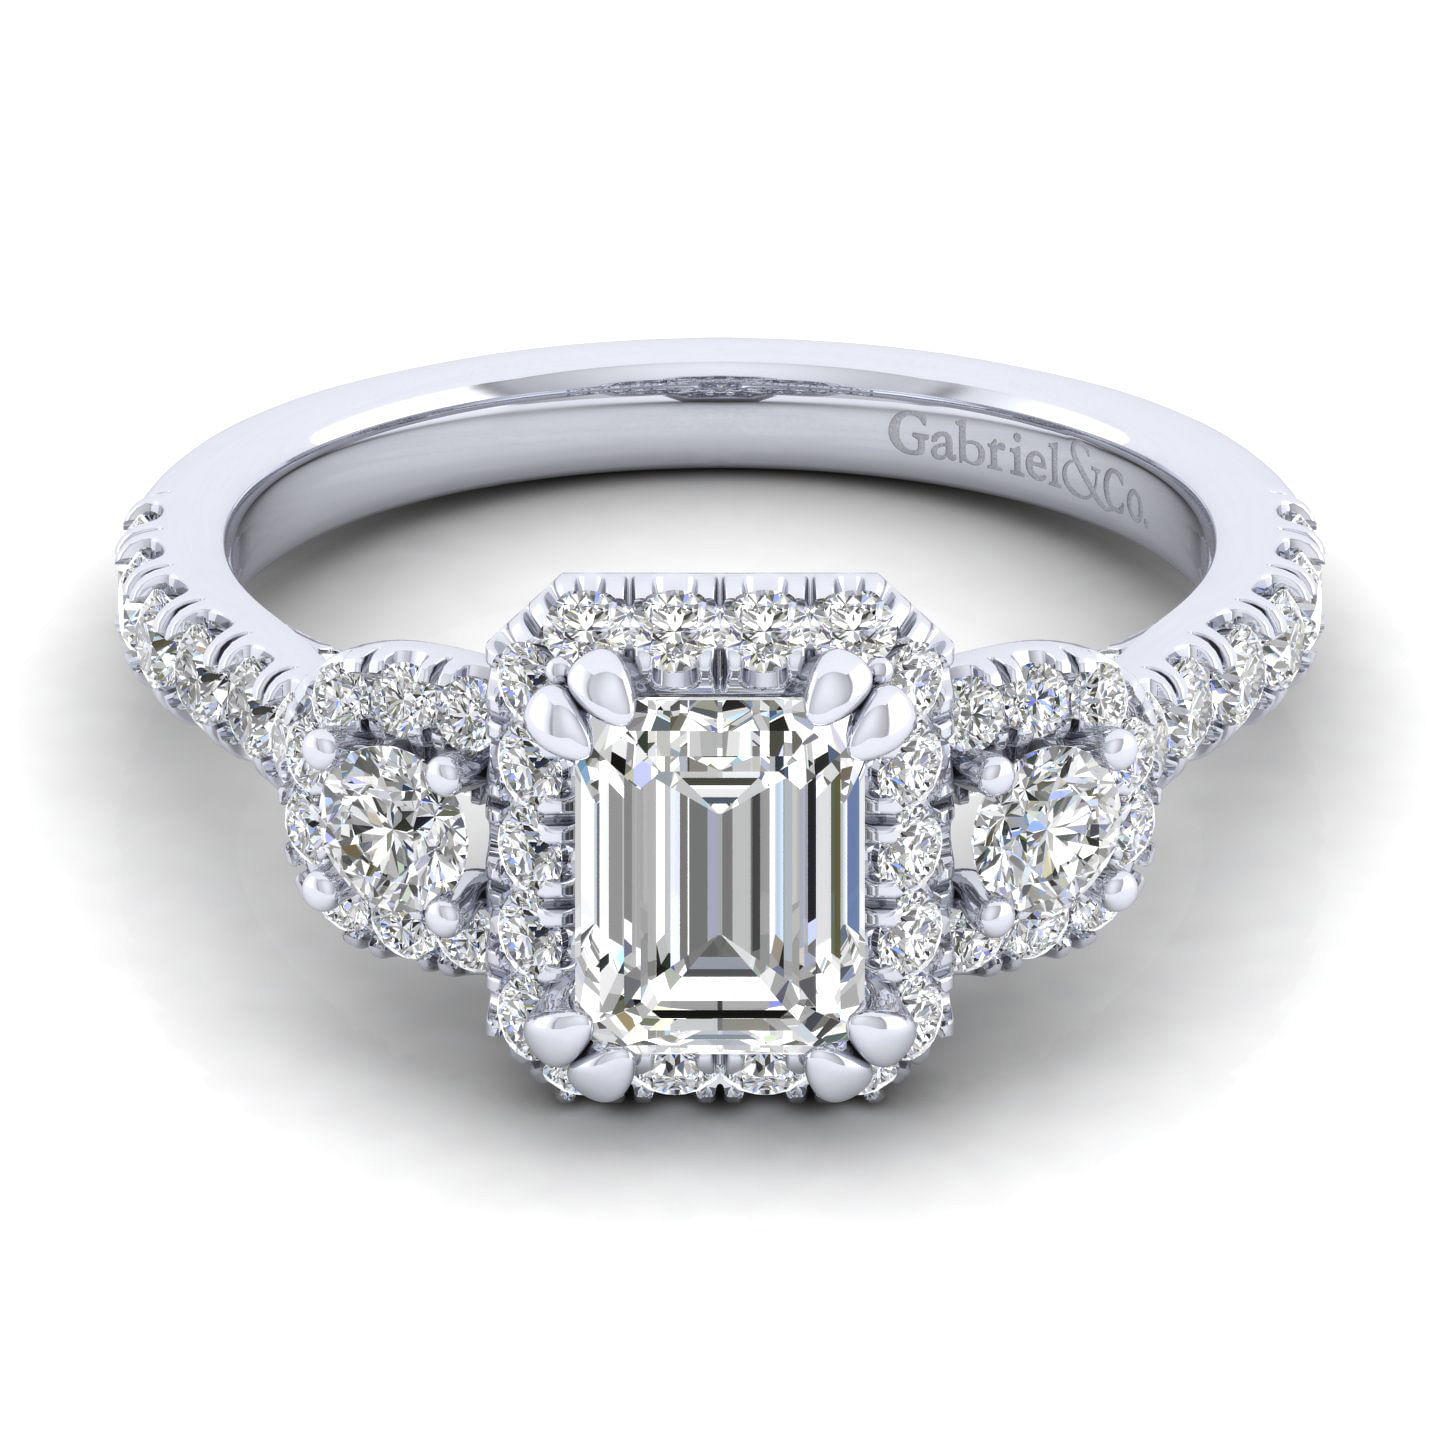 Lavender - 14K White Gold Emerald Cut Diamond Engagement Ring